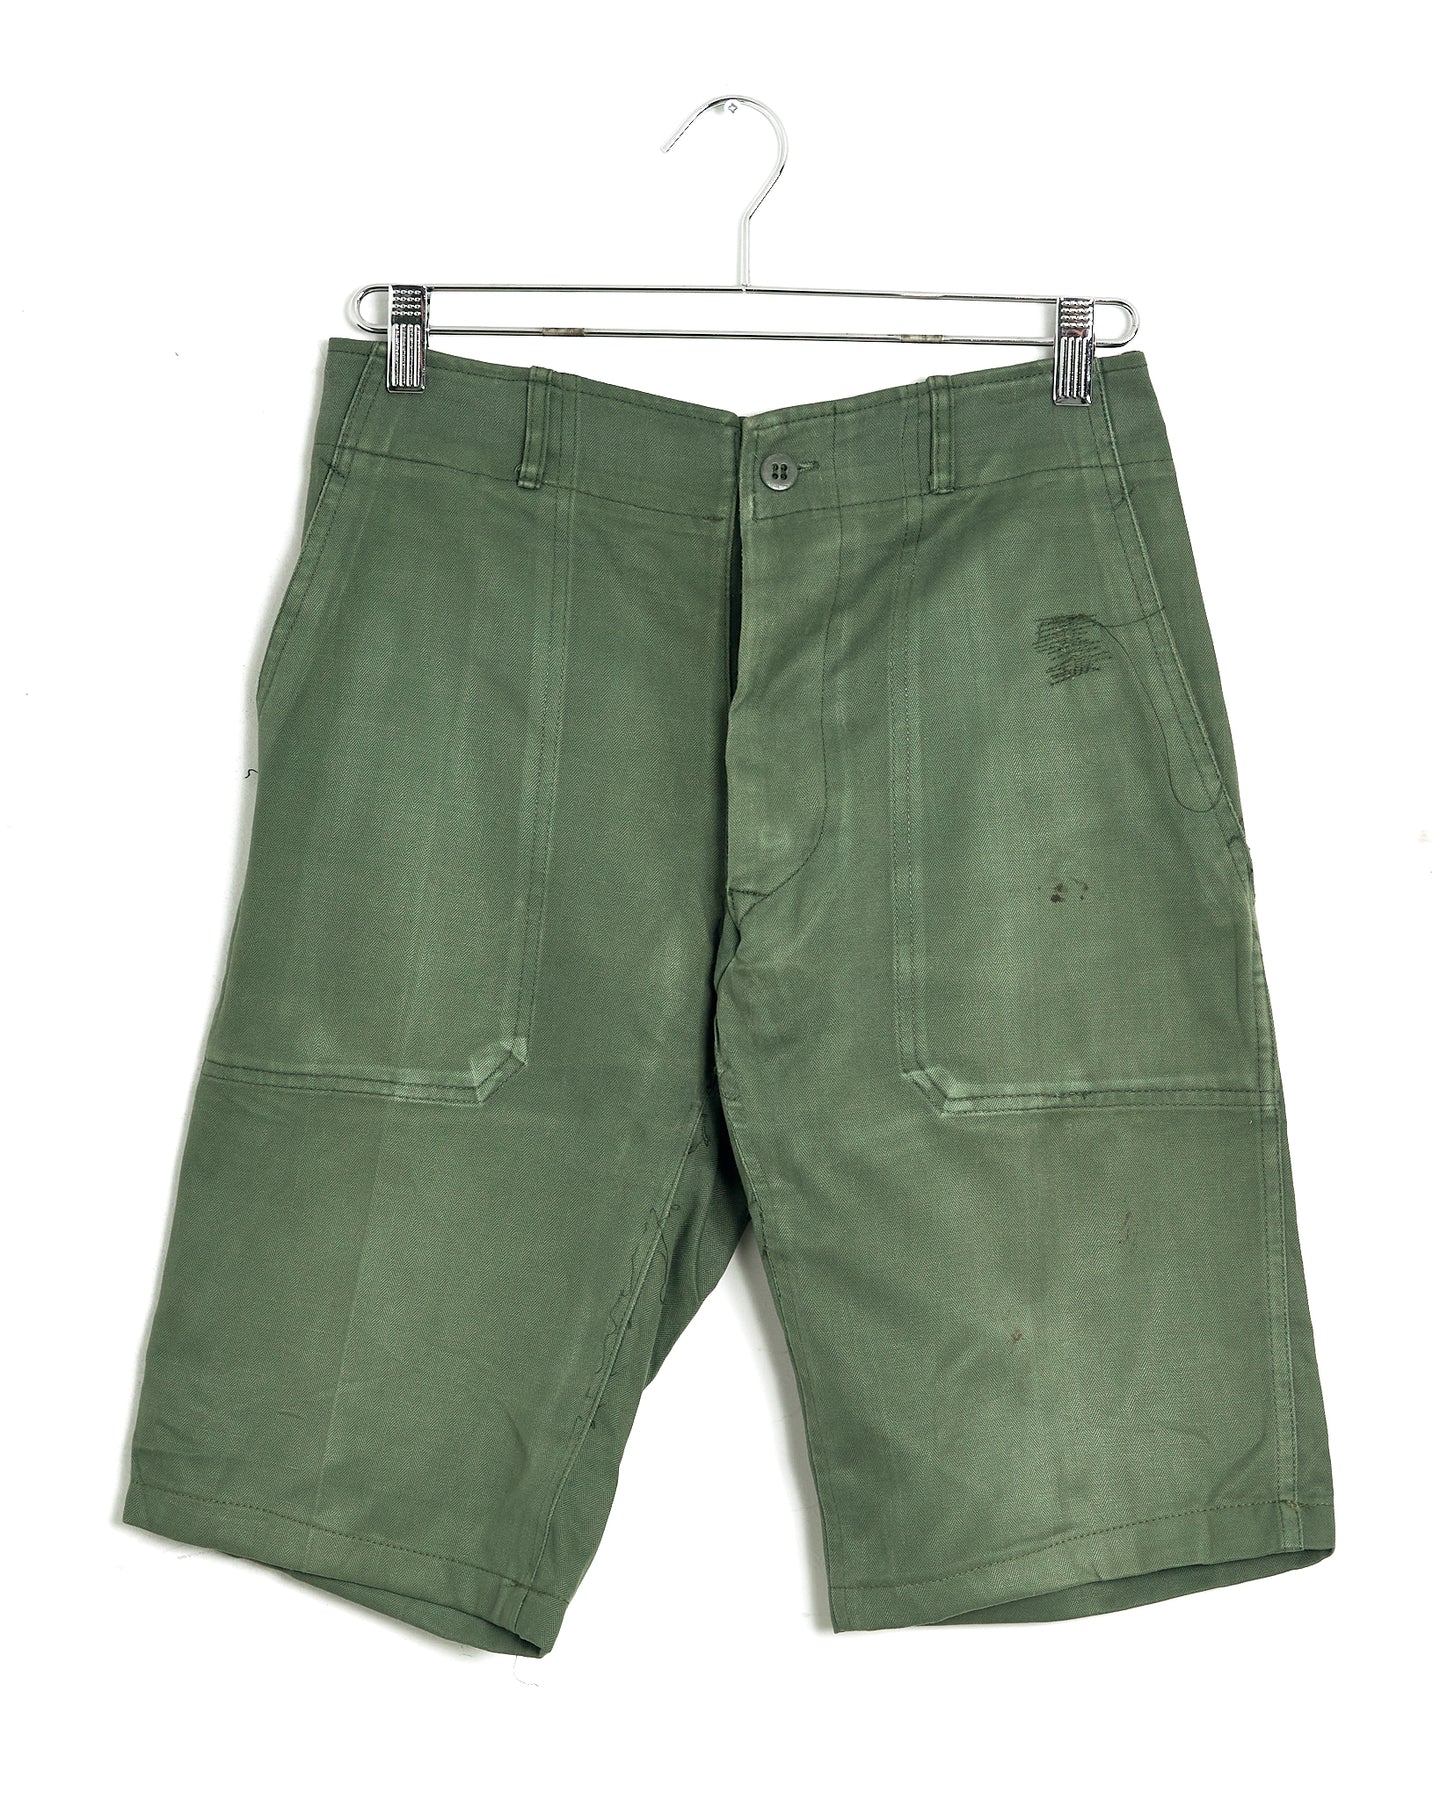 1950s/60s Korean War HBT Shorts - 30